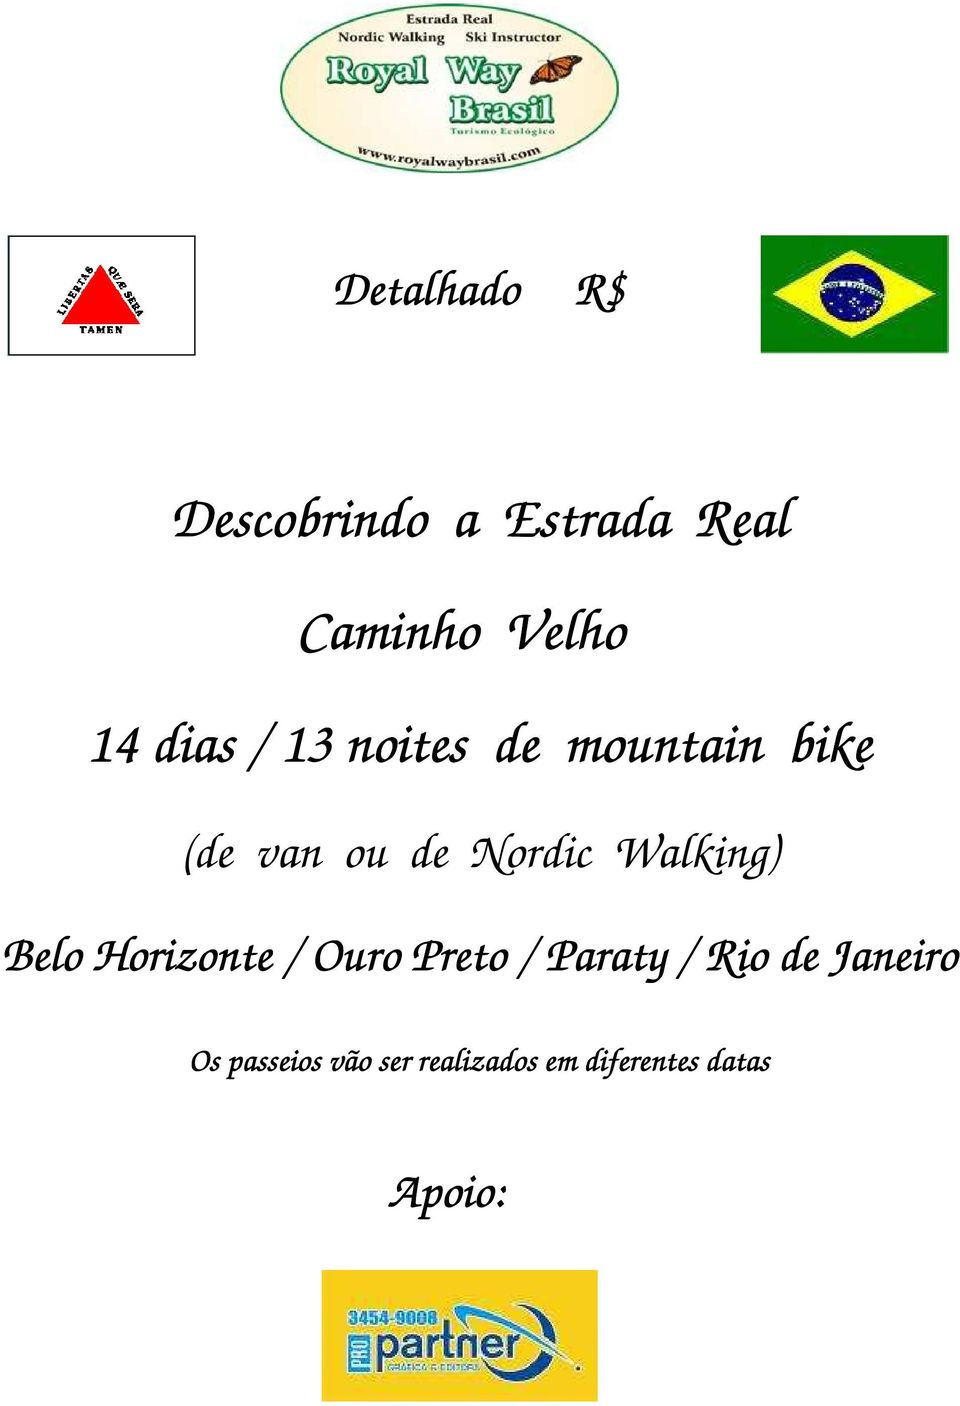 Walking) Belo Horizonte / Ouro Preto / Paraty / Rio de